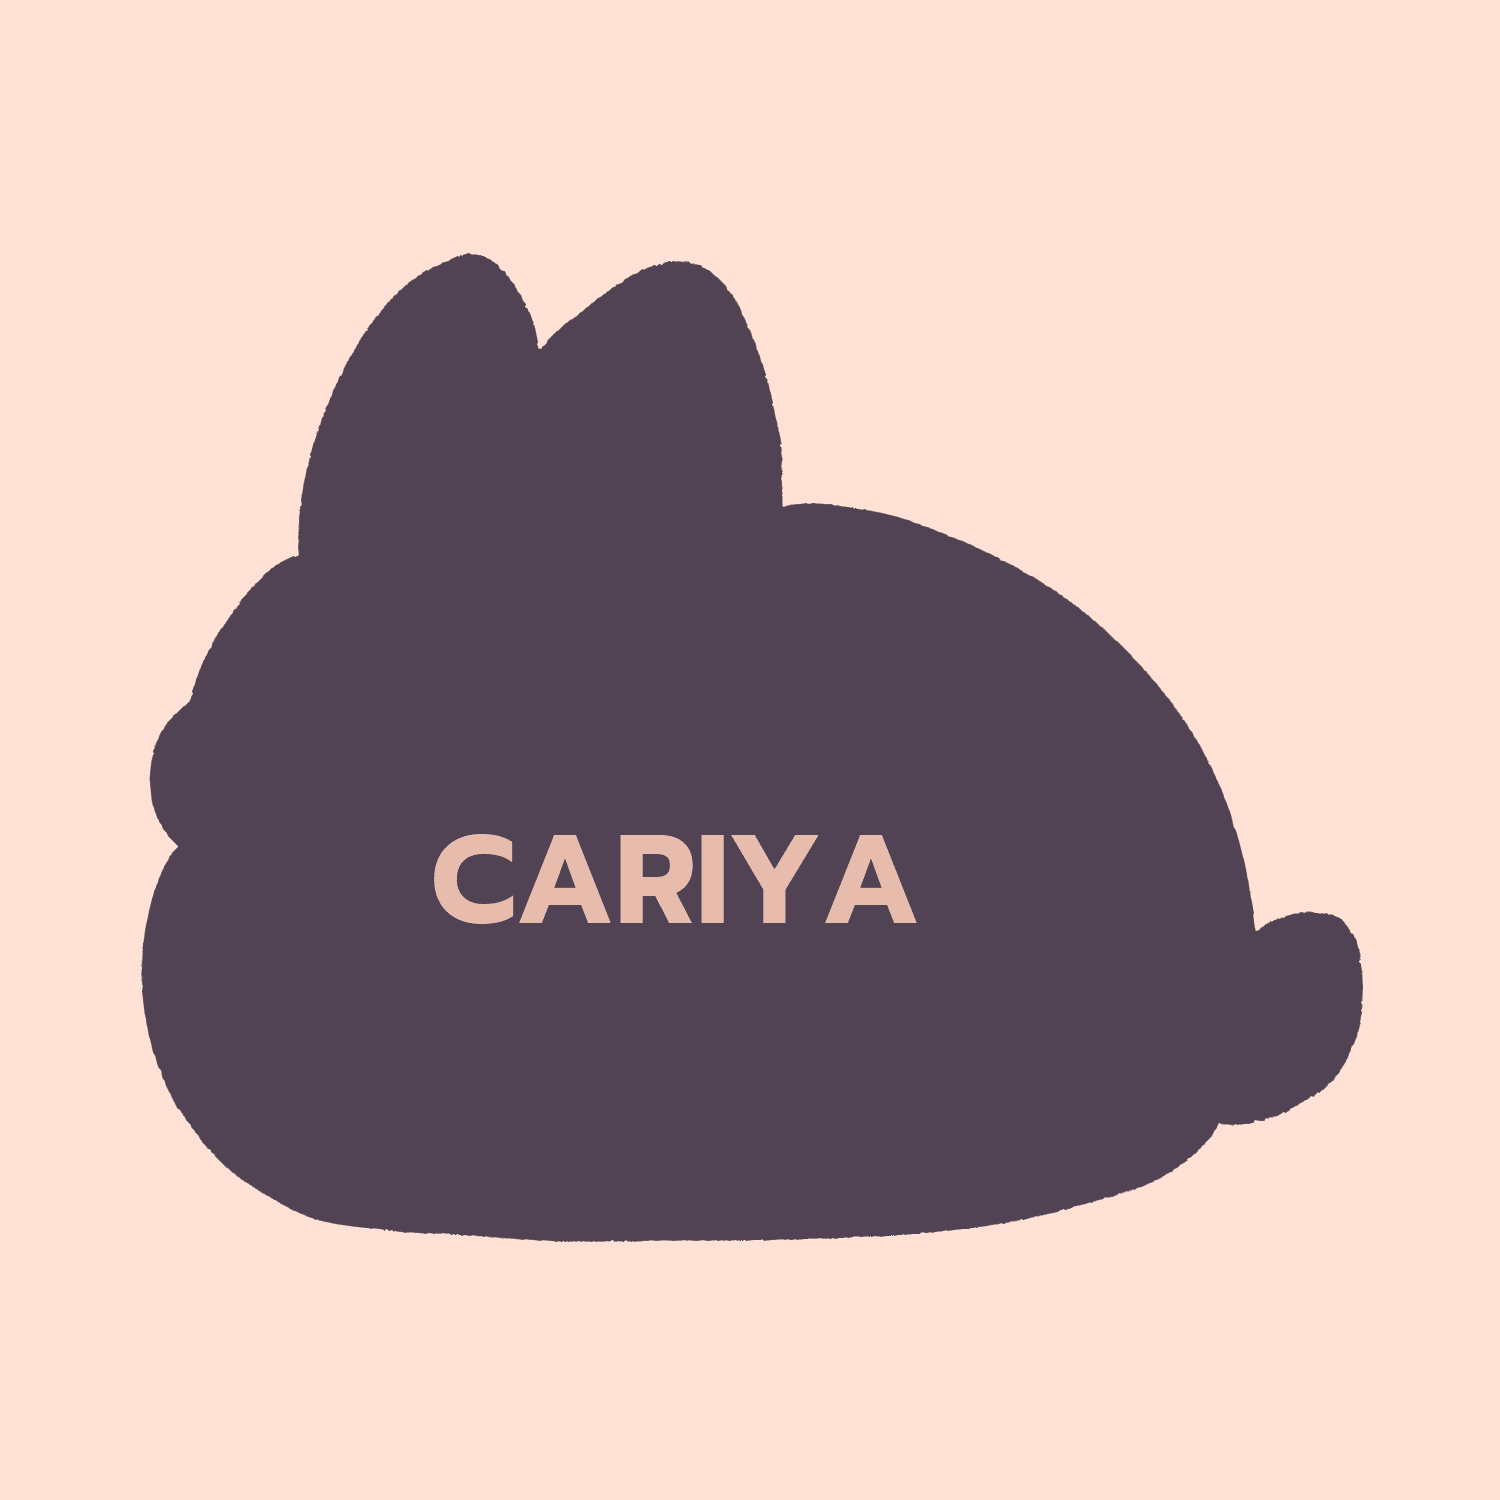 Cariya